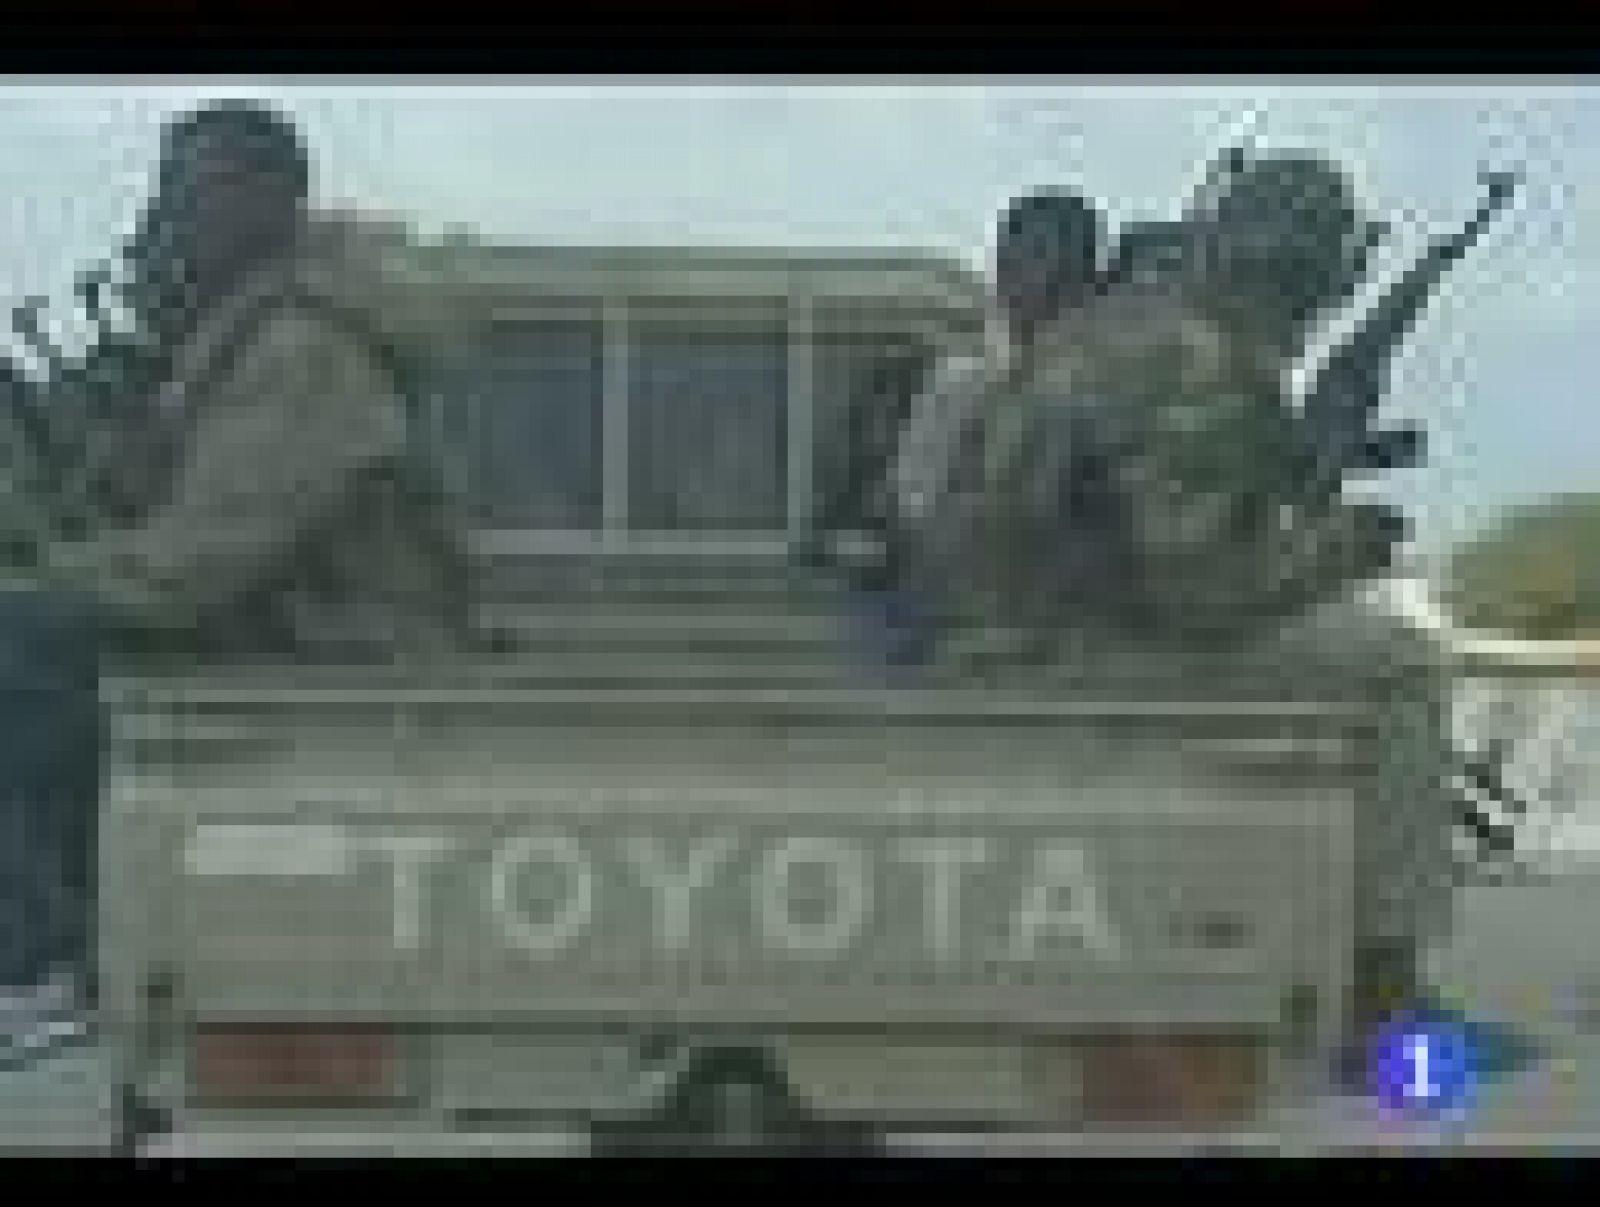 Telediario 1: Se busca expulsar Al-Shabab | RTVE Play